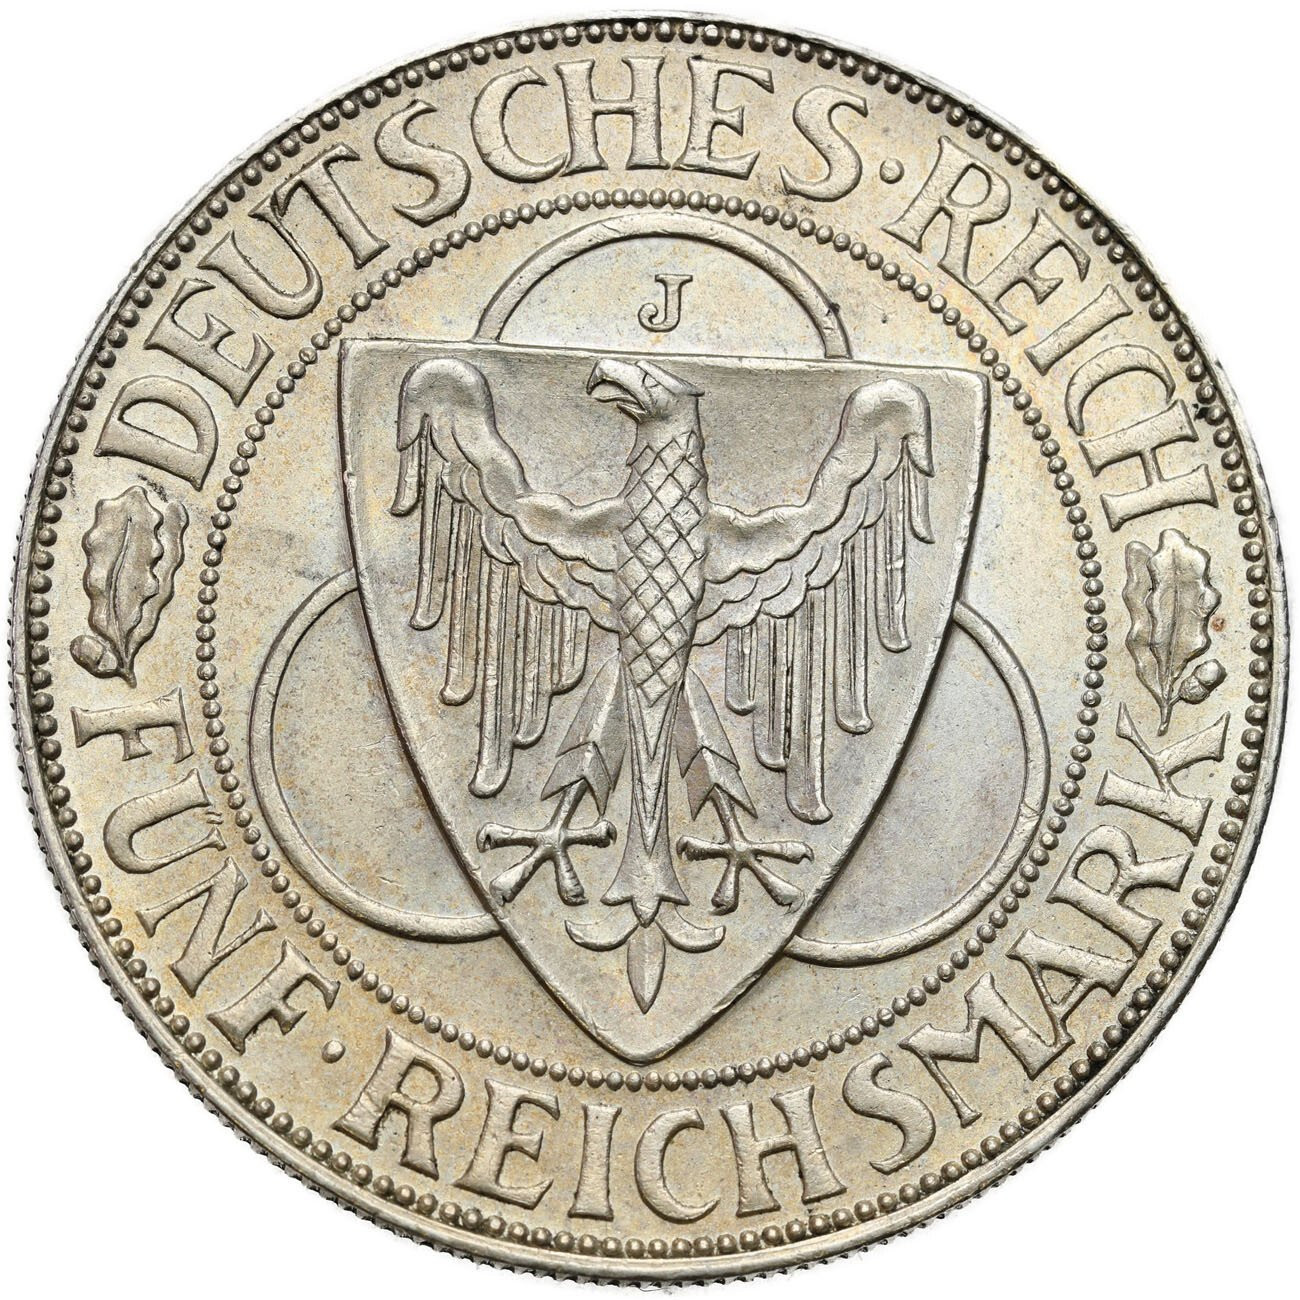 Niemcy, Weimar. 5 marek 1930 J, Hamburg - RZADKIE